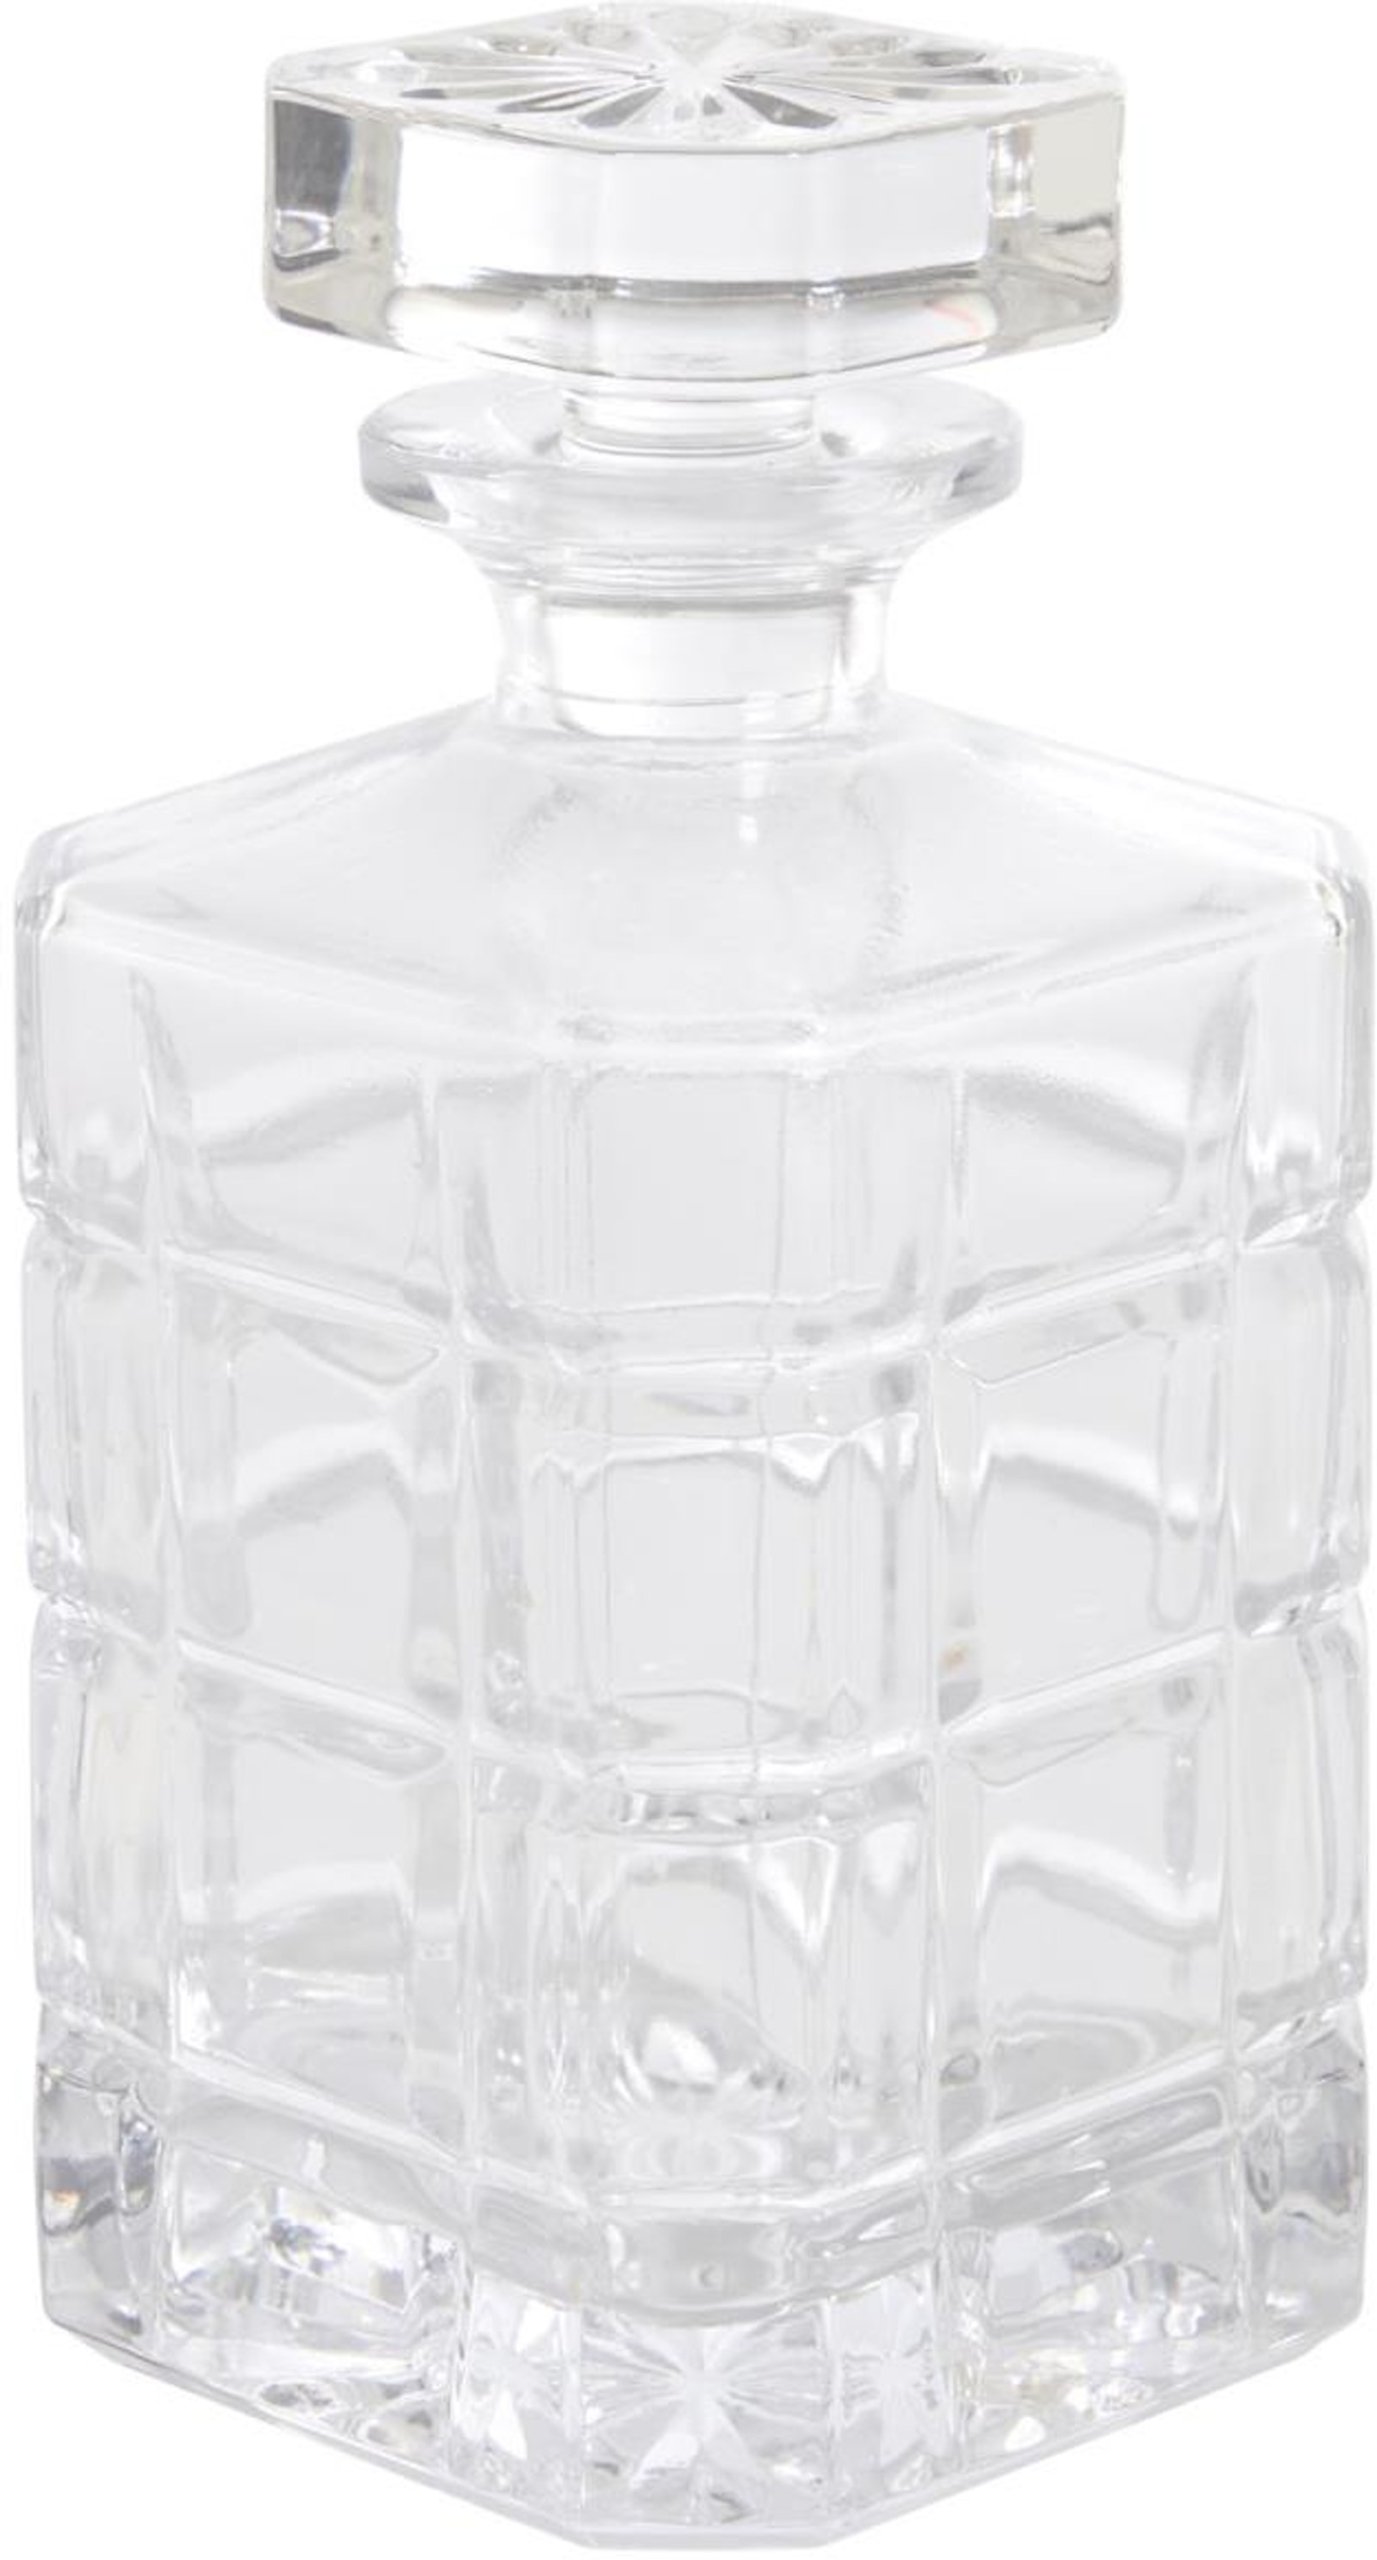 Hina, Whisky flaske, glas by Laforma (H: 22,5 cm. x B: 9 cm. x L: 9 cm., Klar)